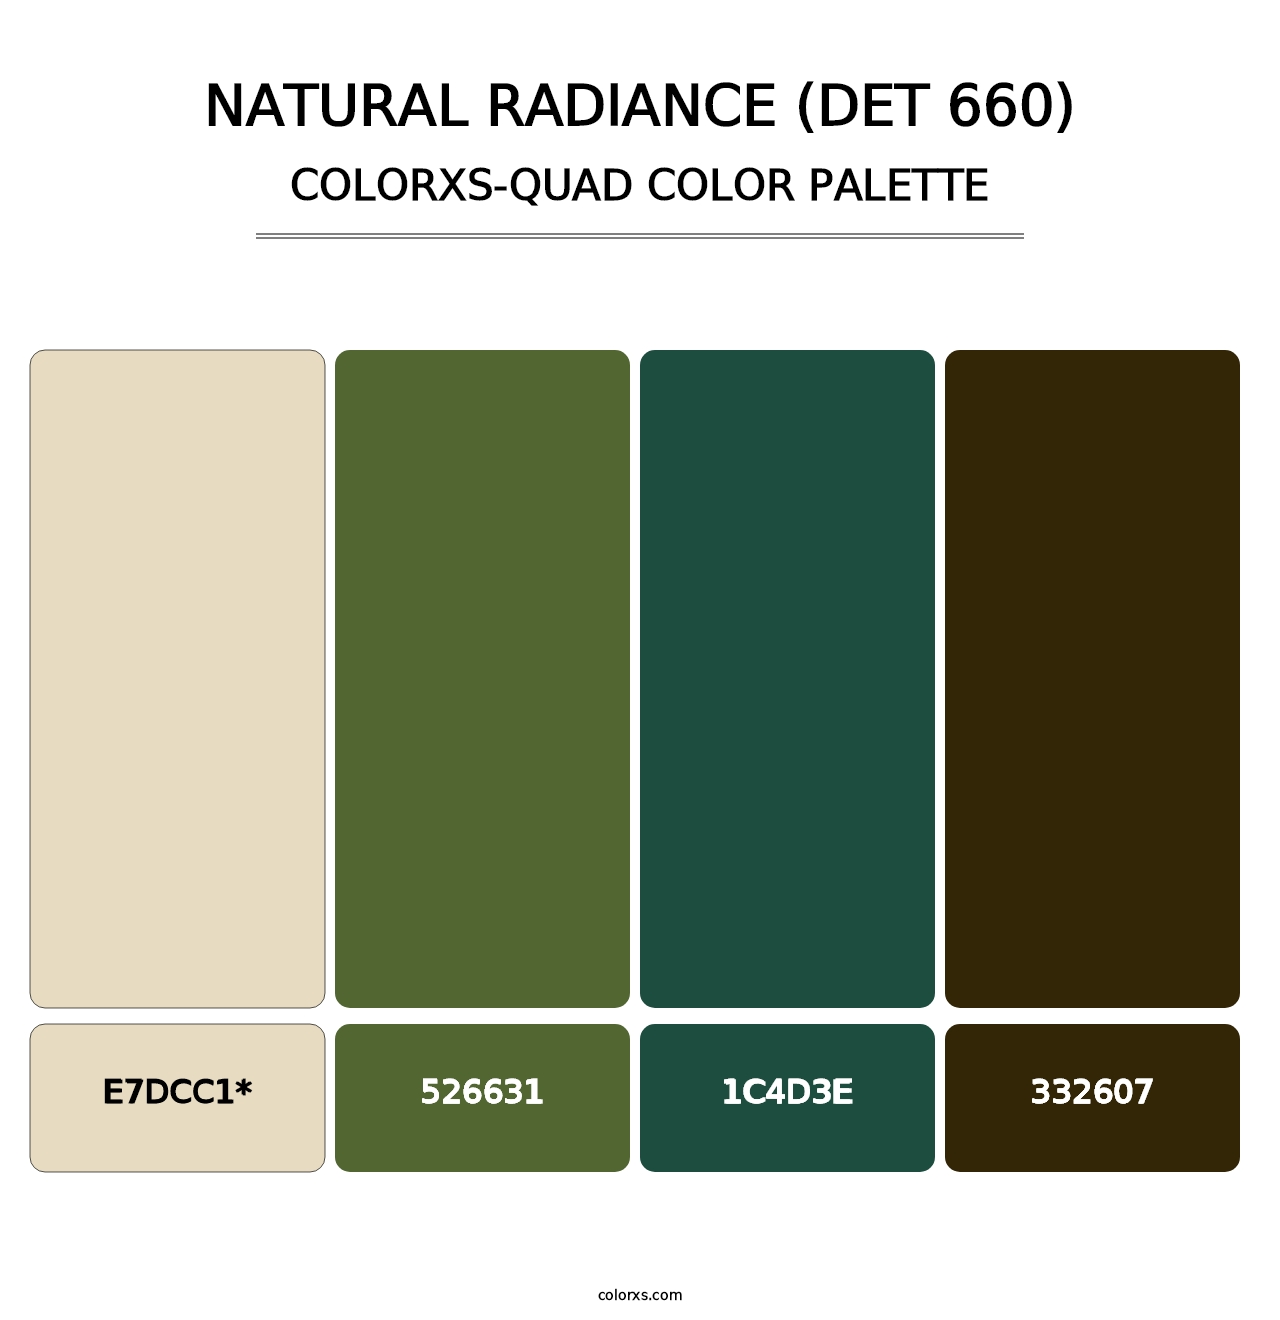 Natural Radiance (DET 660) - Colorxs Quad Palette